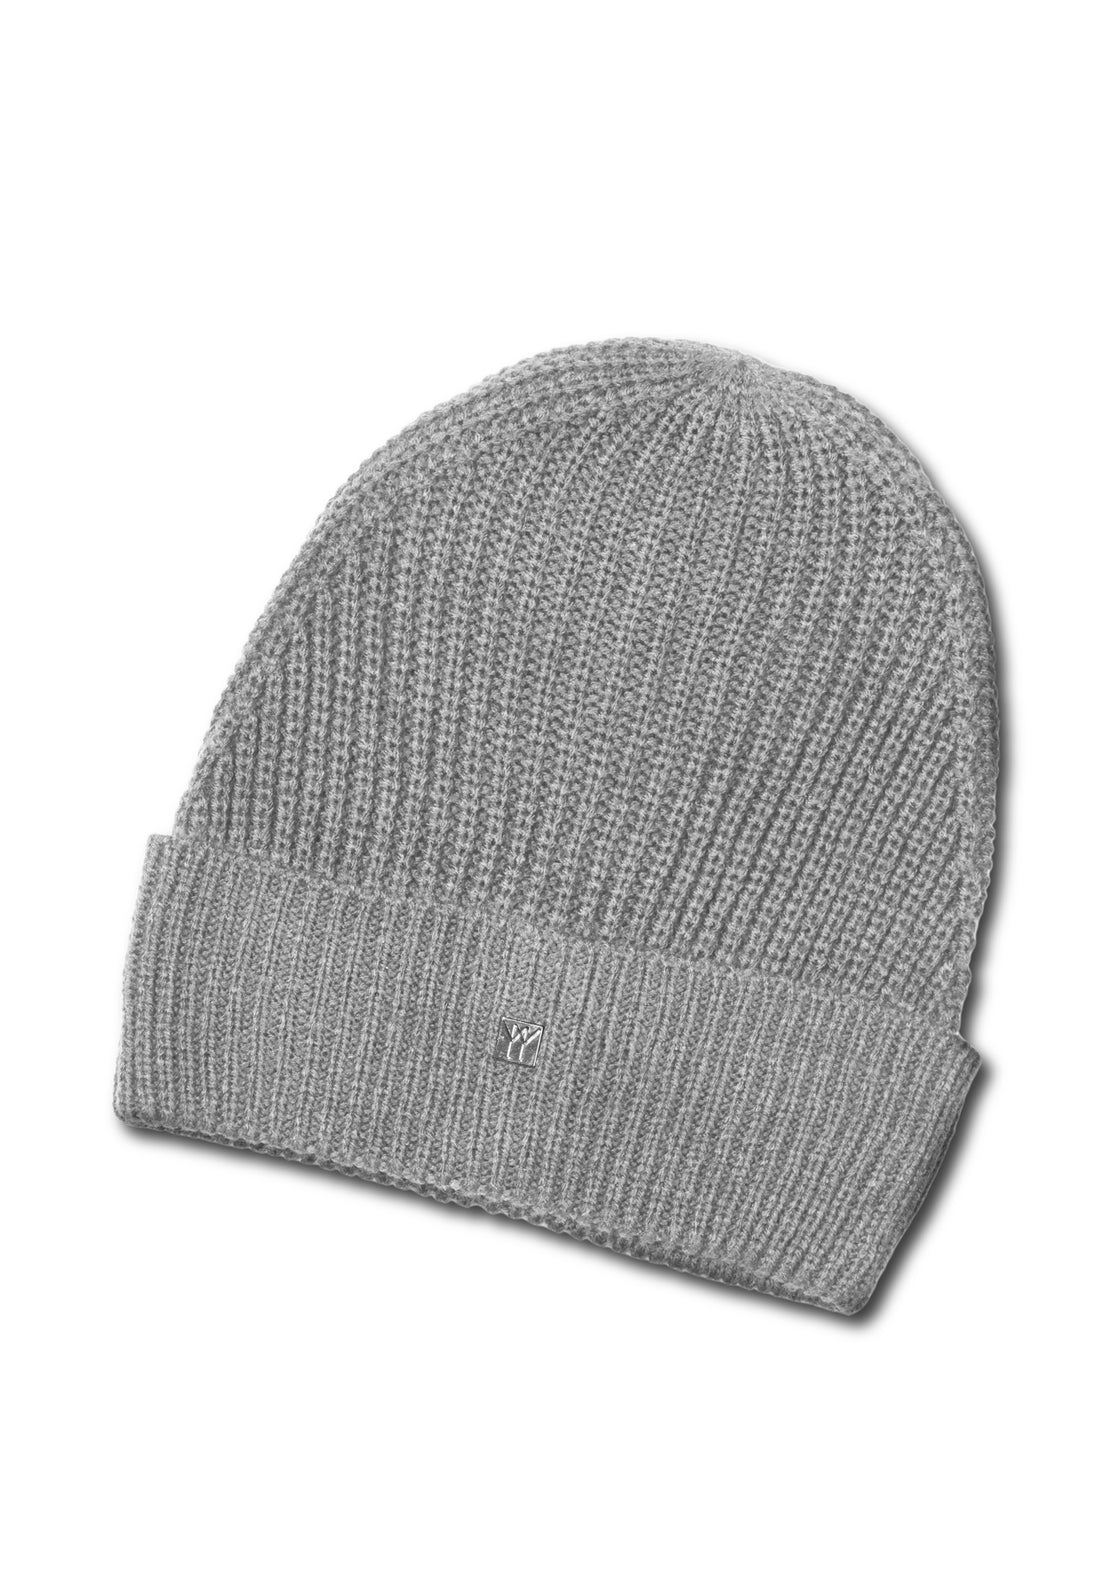 Ribbed wool cap with metal logo - Pearl Grey